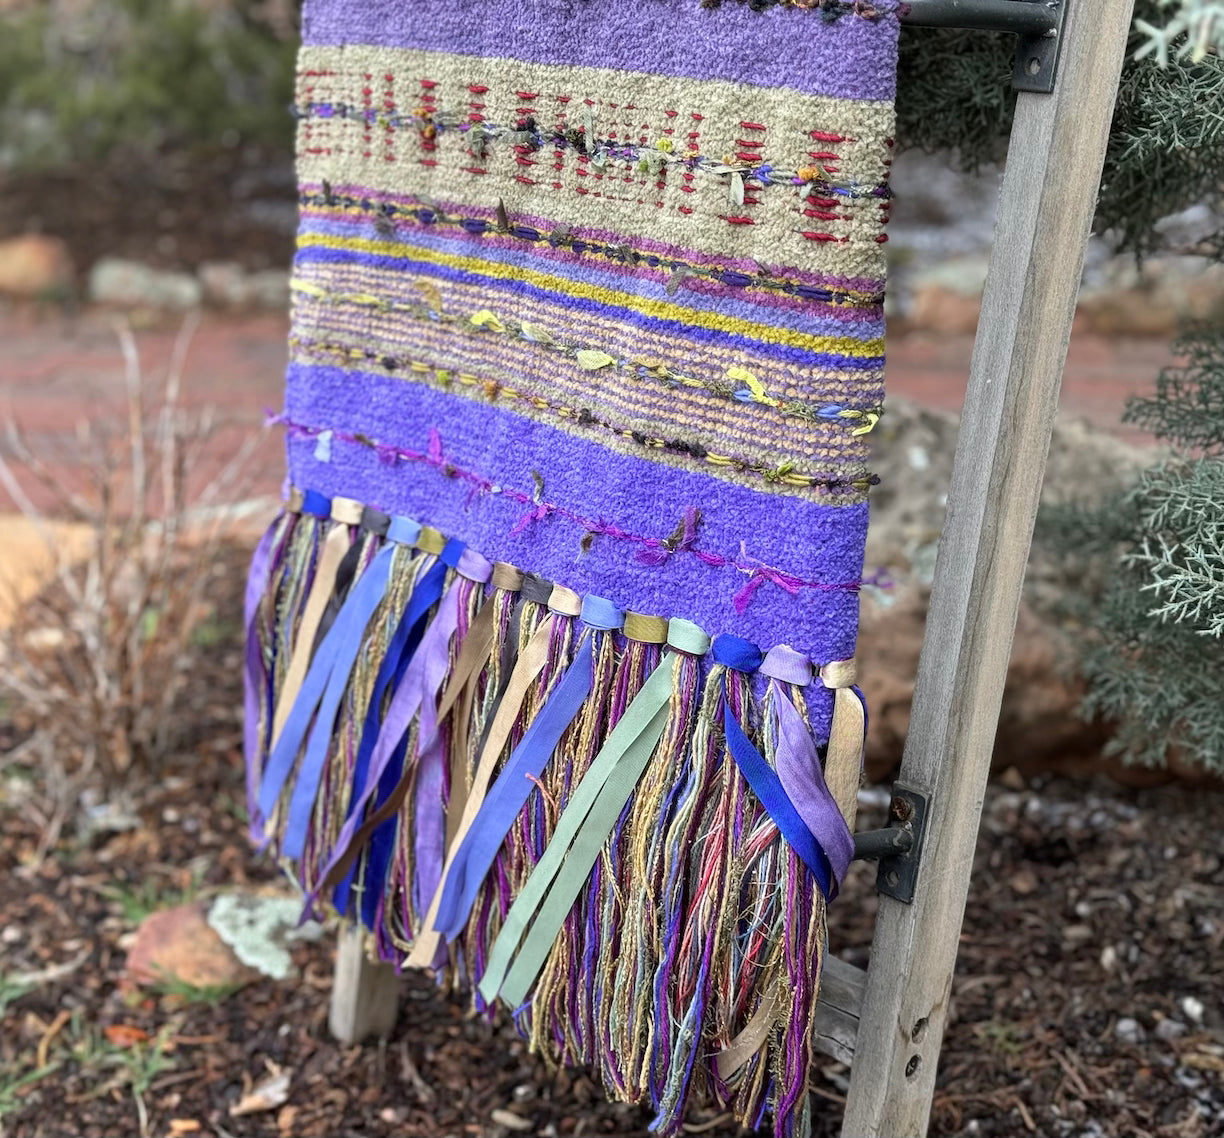 Gretel Underwood "Panache" throw handmade in Santa Fe, NM